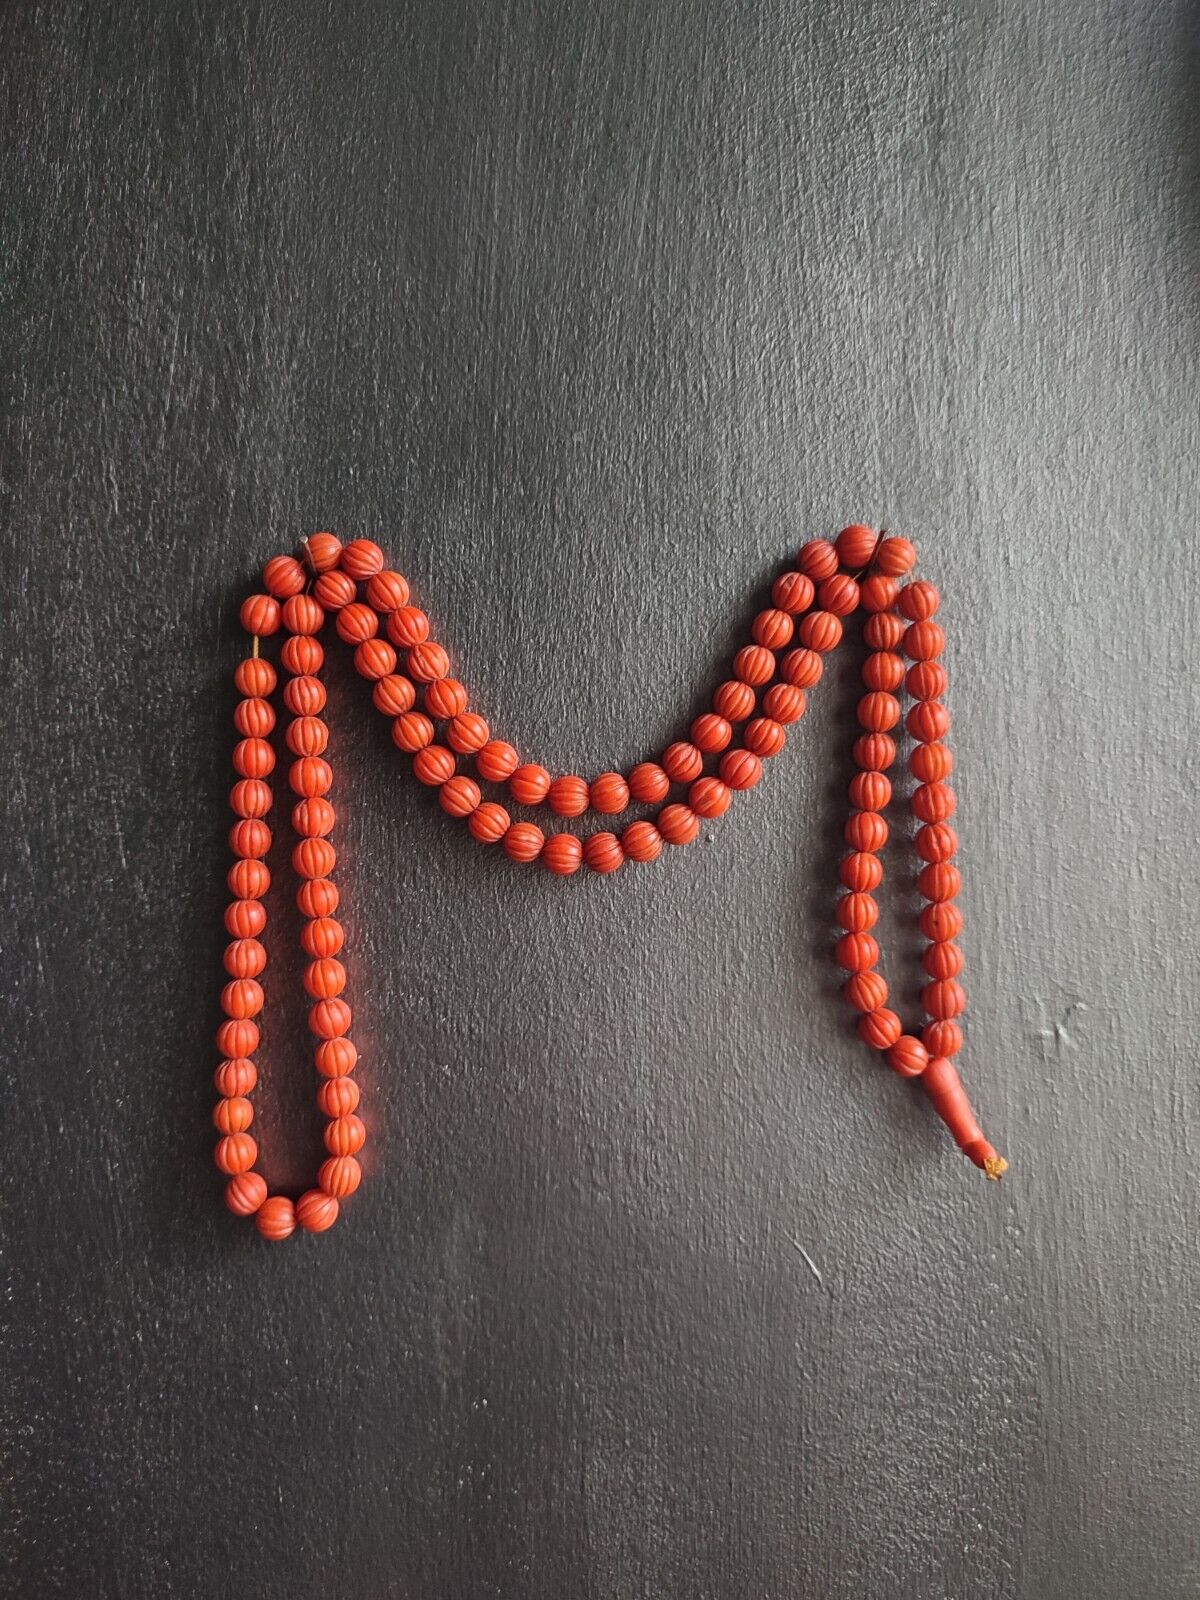 Antique Ottoman Turkish Coral Prayer Beads - RRRRR - Hand Shaped